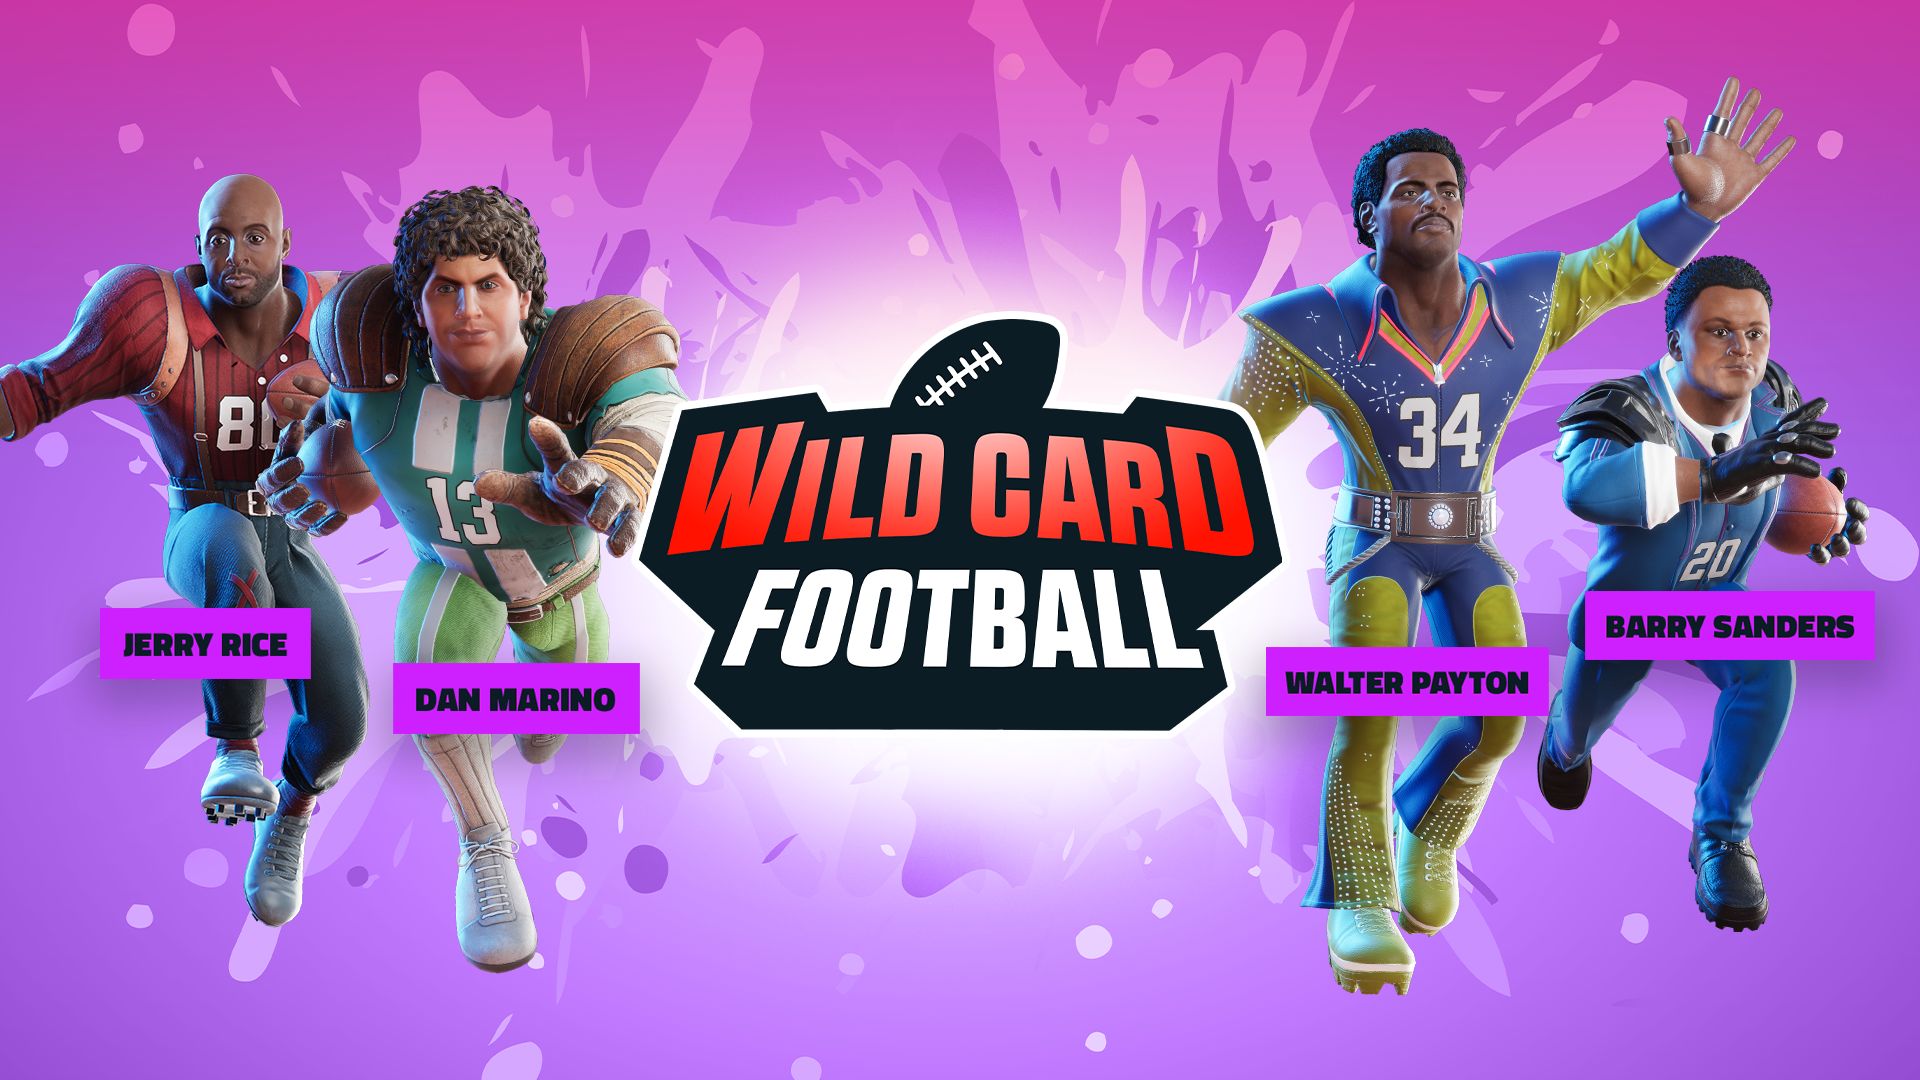 Wild Card Football Recreates Legendary Players as a Pre-Order